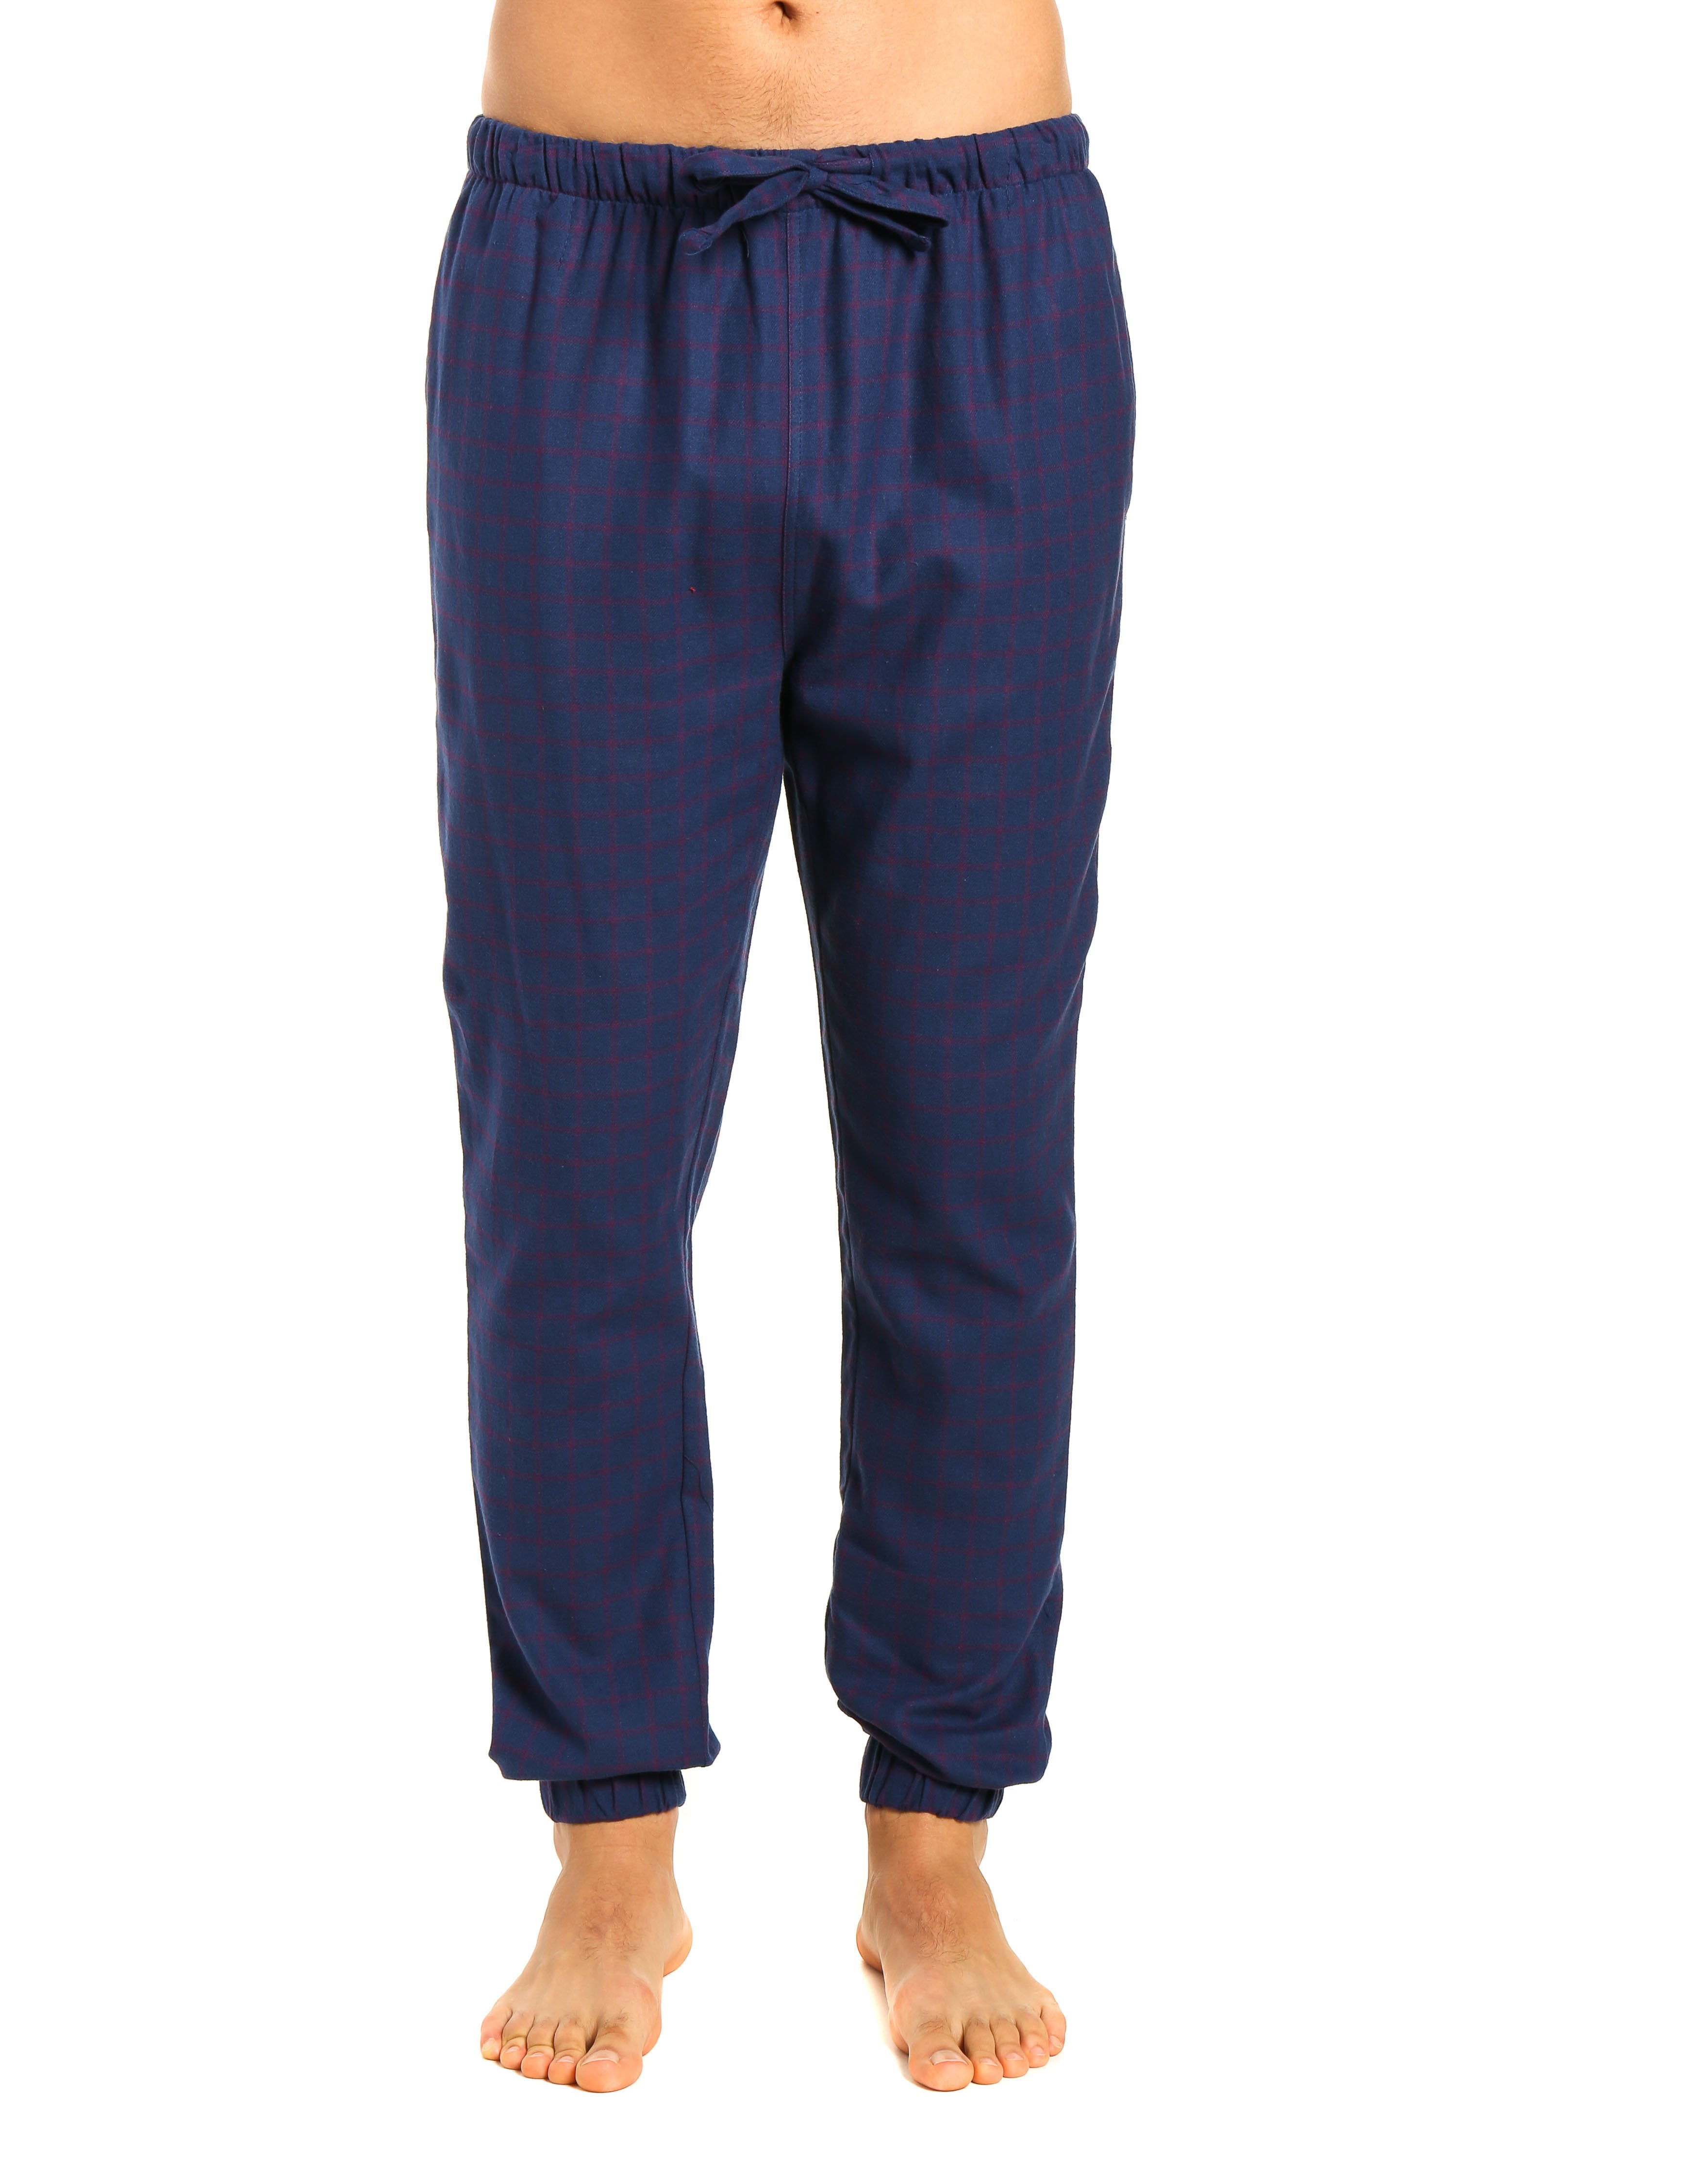 Mens 100% Cotton Flannel Jogger Lounge Pants - Checks - Dark Blue